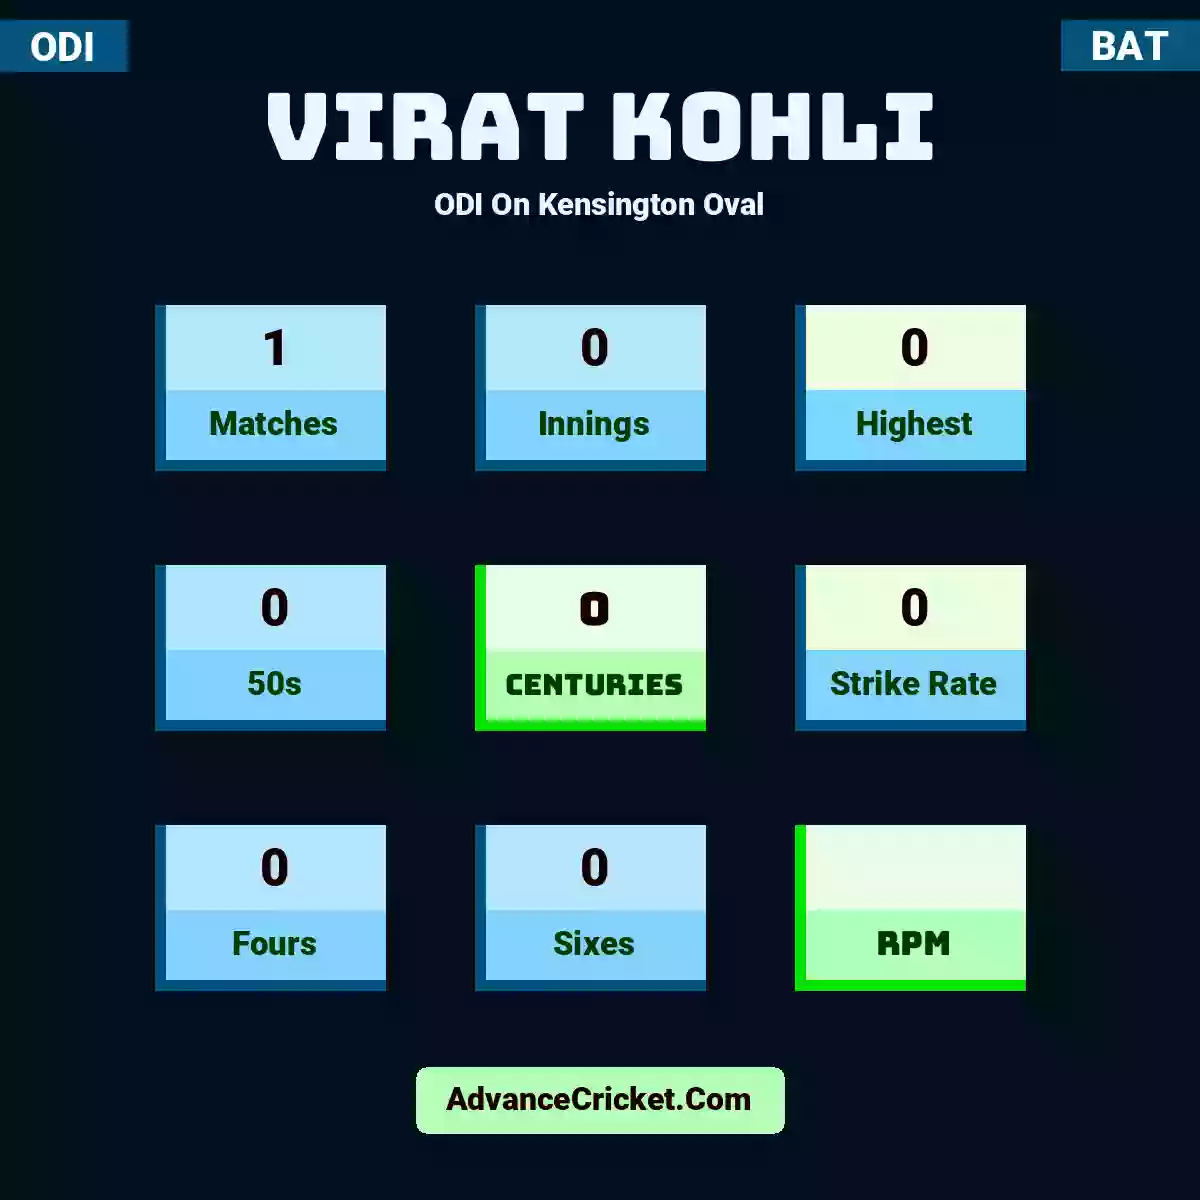 Virat Kohli ODI  On Kensington Oval, Virat Kohli played 1 matches, scored 0 runs as highest, 0 half-centuries, and 0 centuries, with a strike rate of 0. V.Kohli hit 0 fours and 0 sixes.